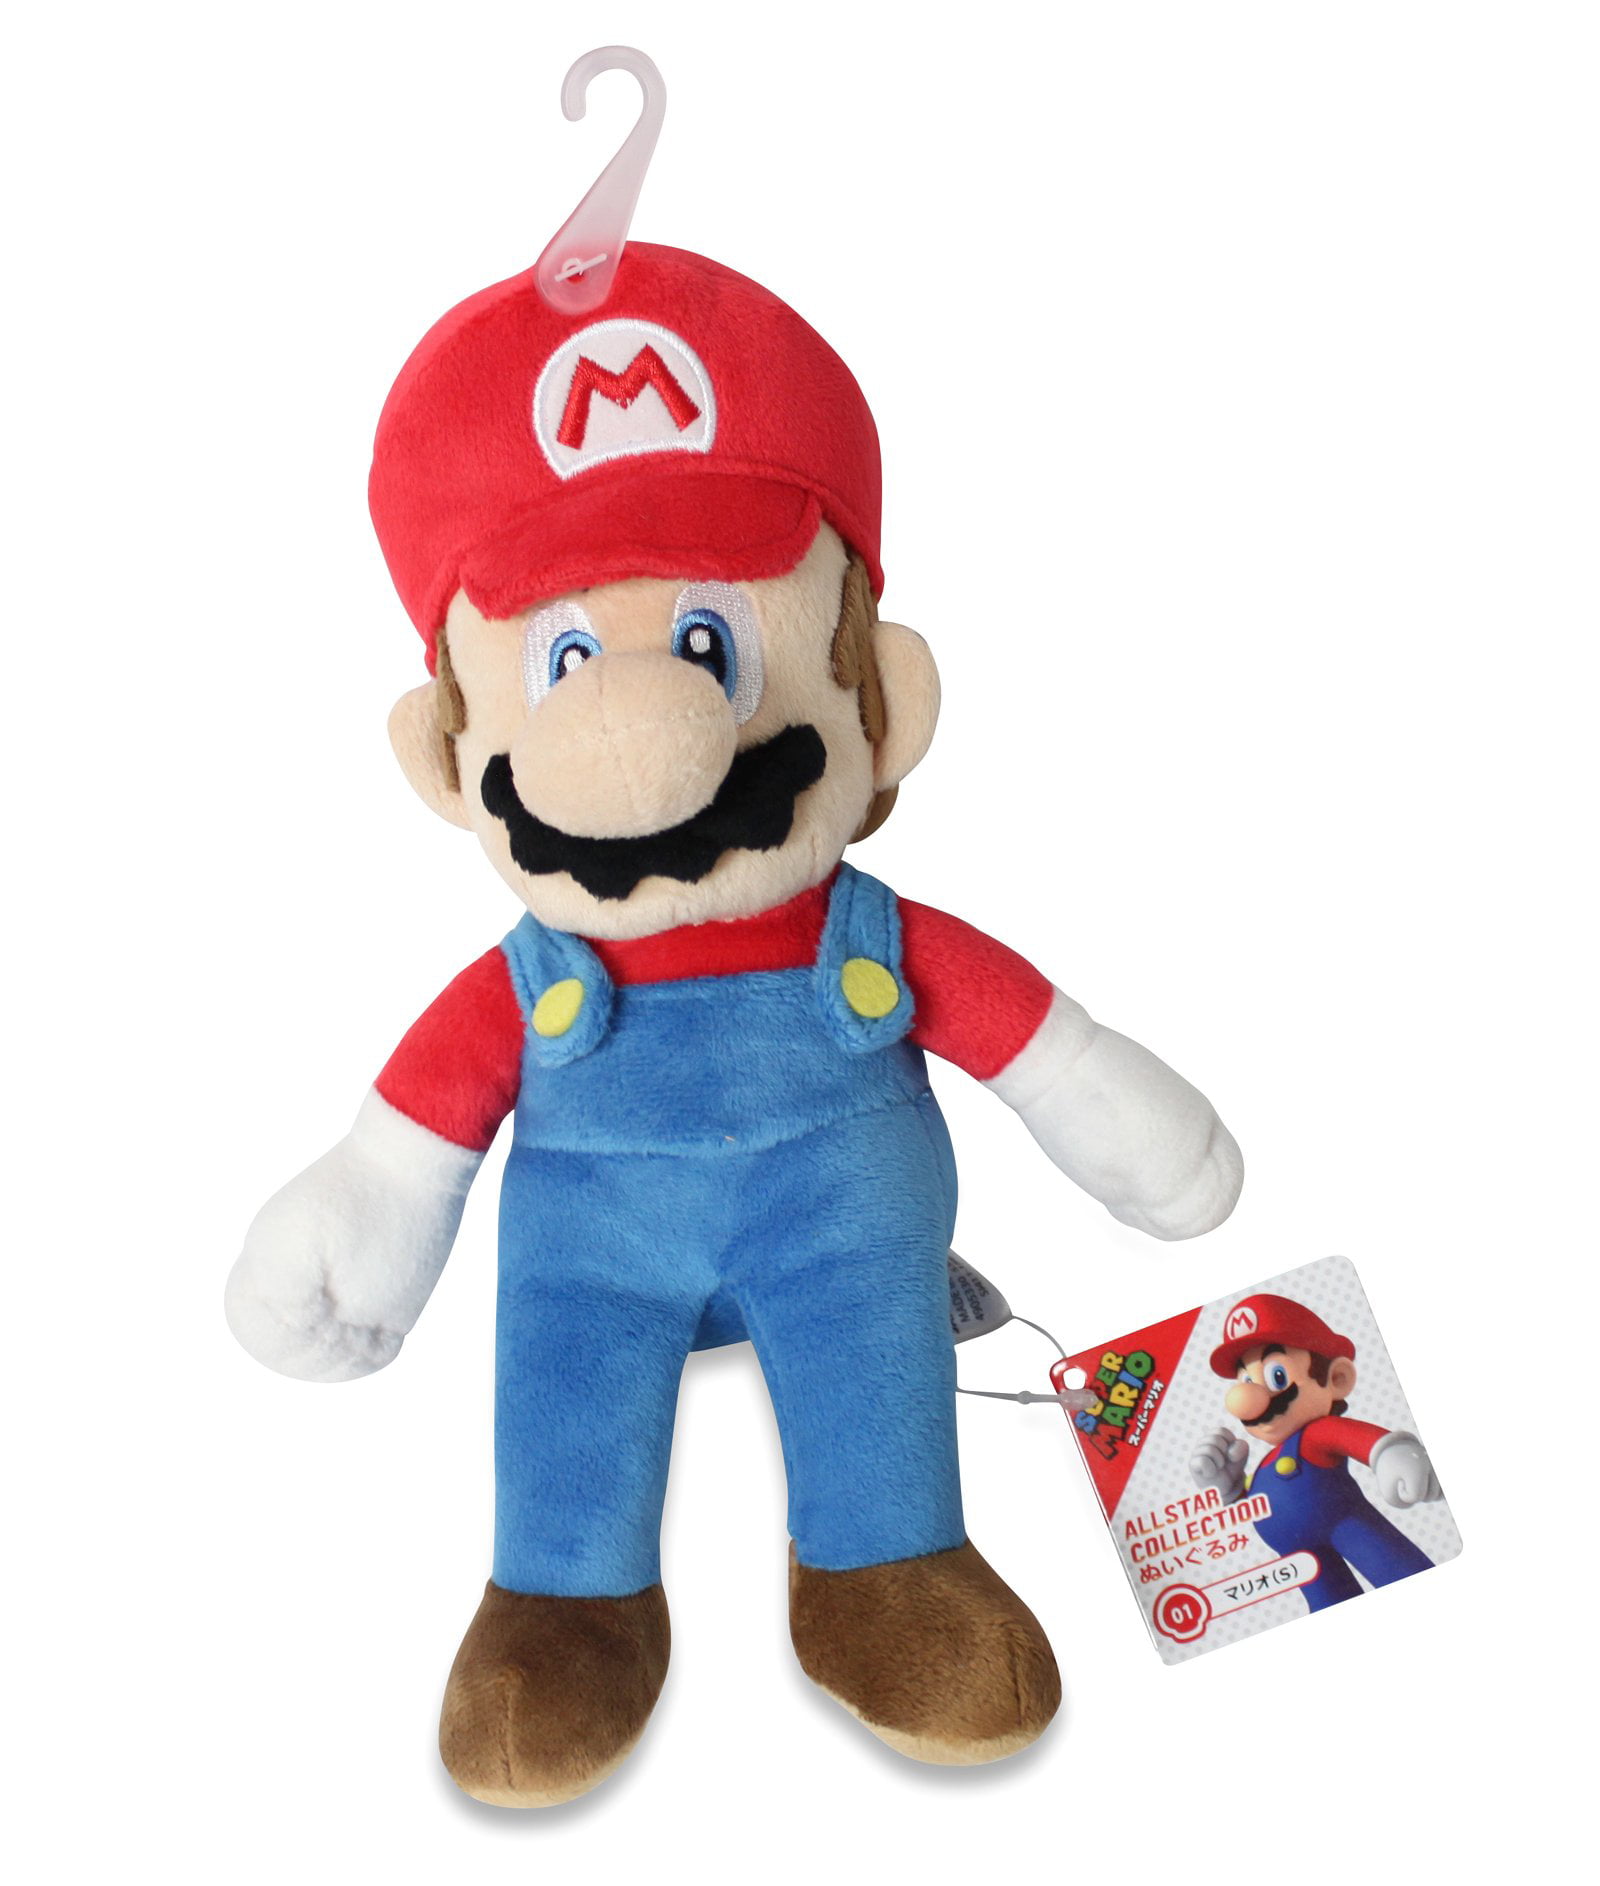 New Sanei Super Mario All Star Collection AC01 Stuffed Plush Doll 9.5" Mario! 